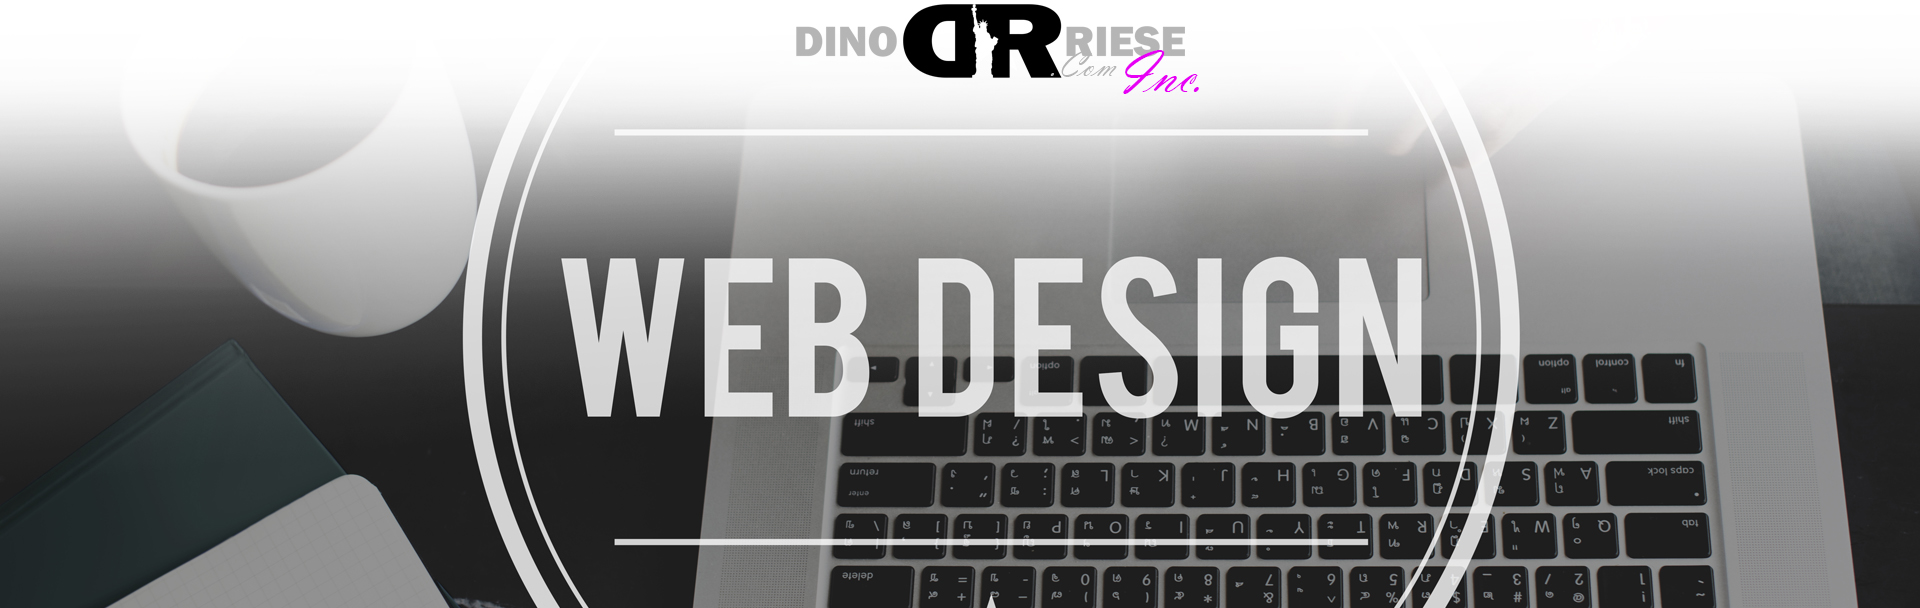 Web Design Professional Services | DinoRiese.com Inc. - Image